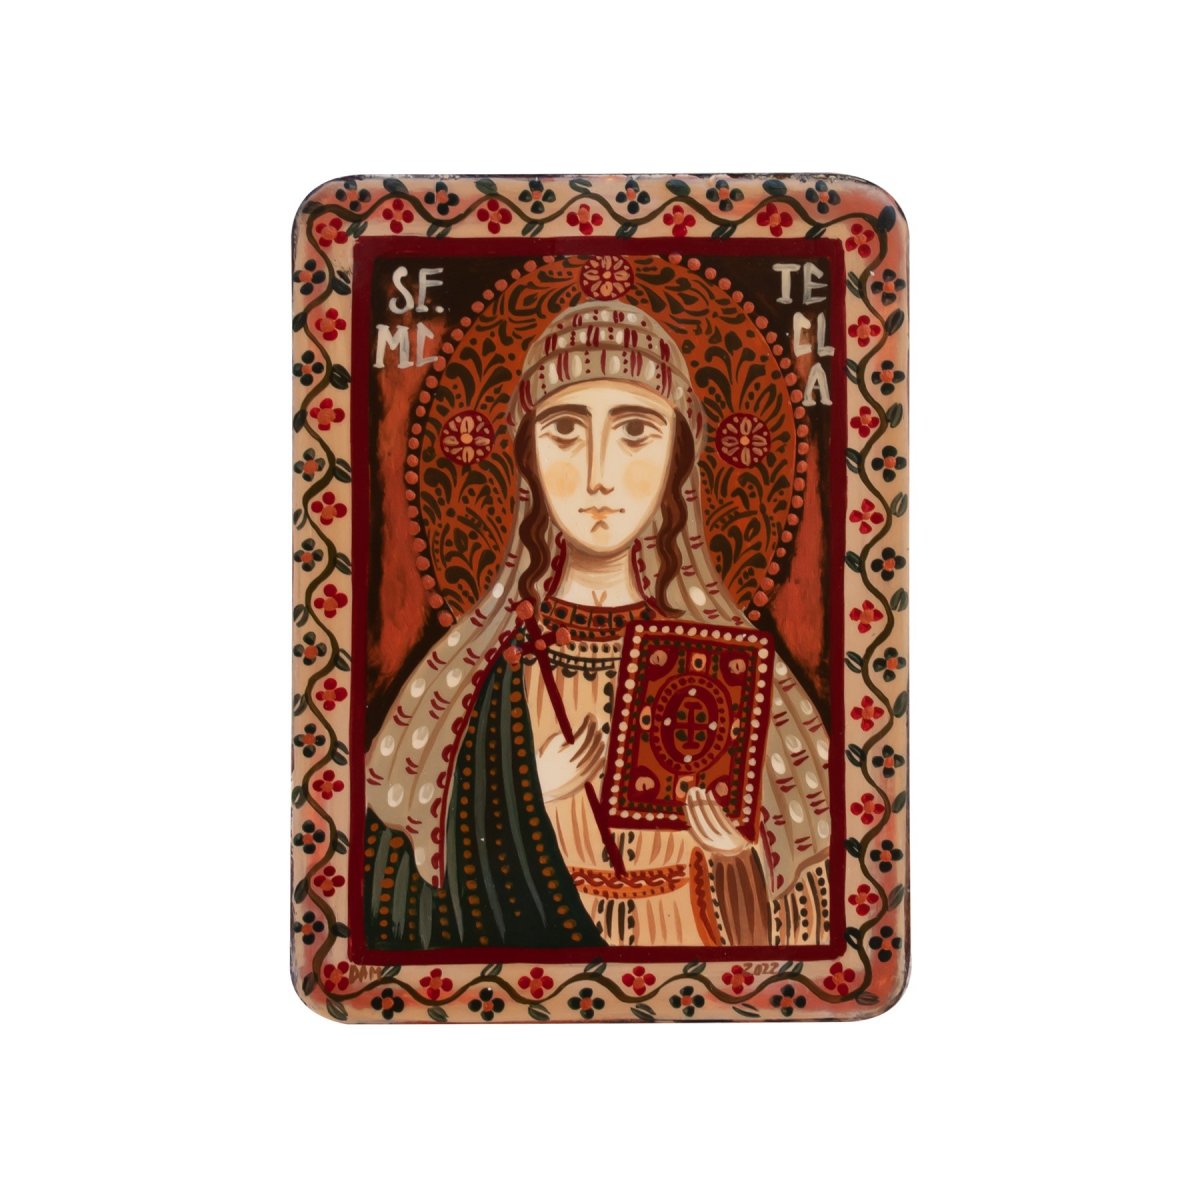 Wood icon, "St. Thekla the Protomartyr", miniature, 7x10cm